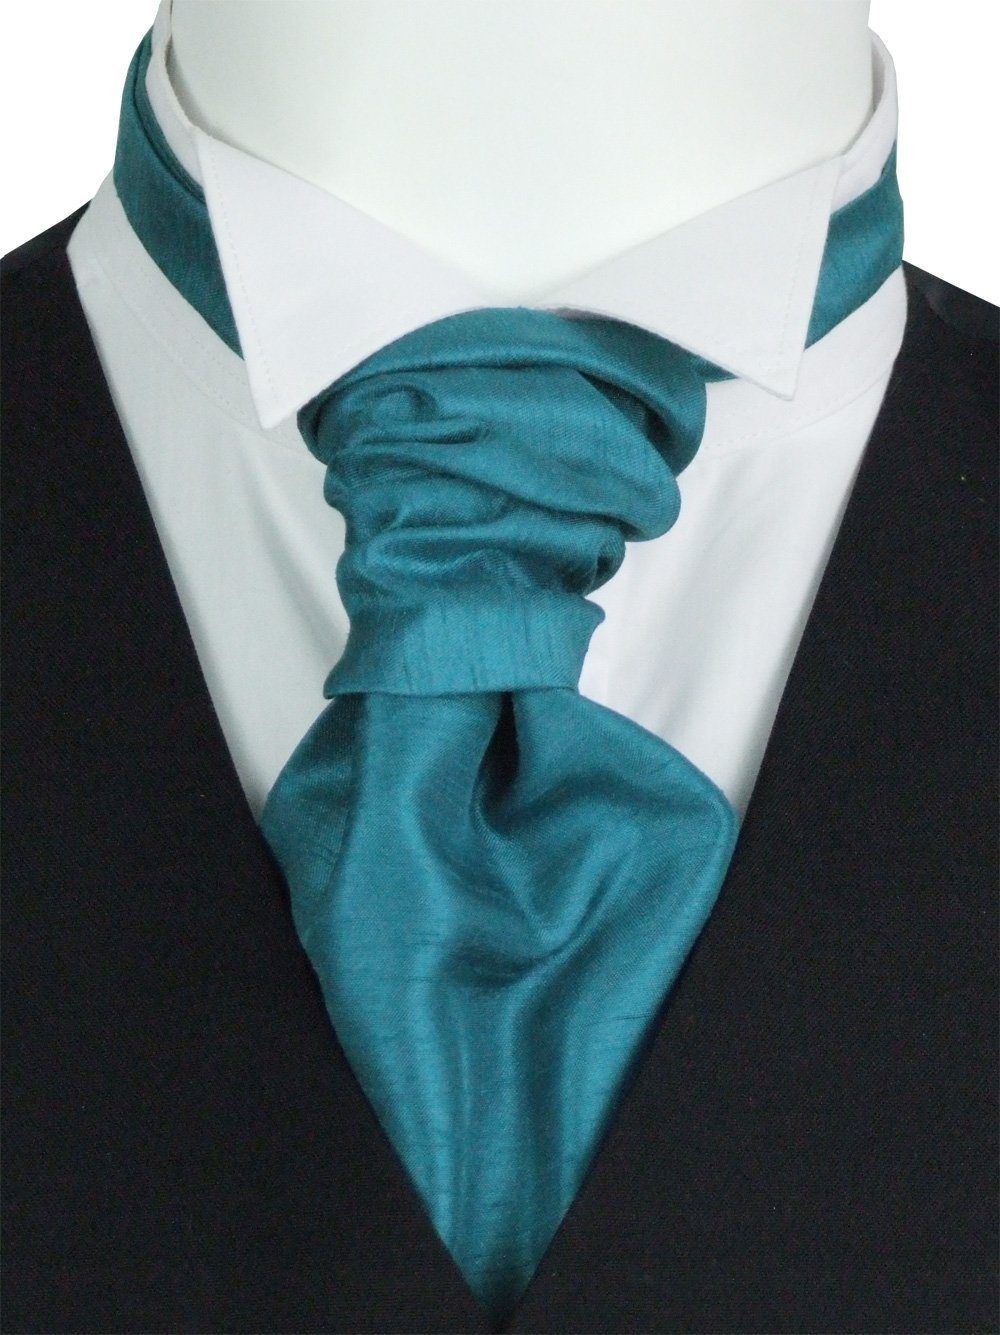 Blue Teal Shantung Boys Wedding Cravat - Childrenswear